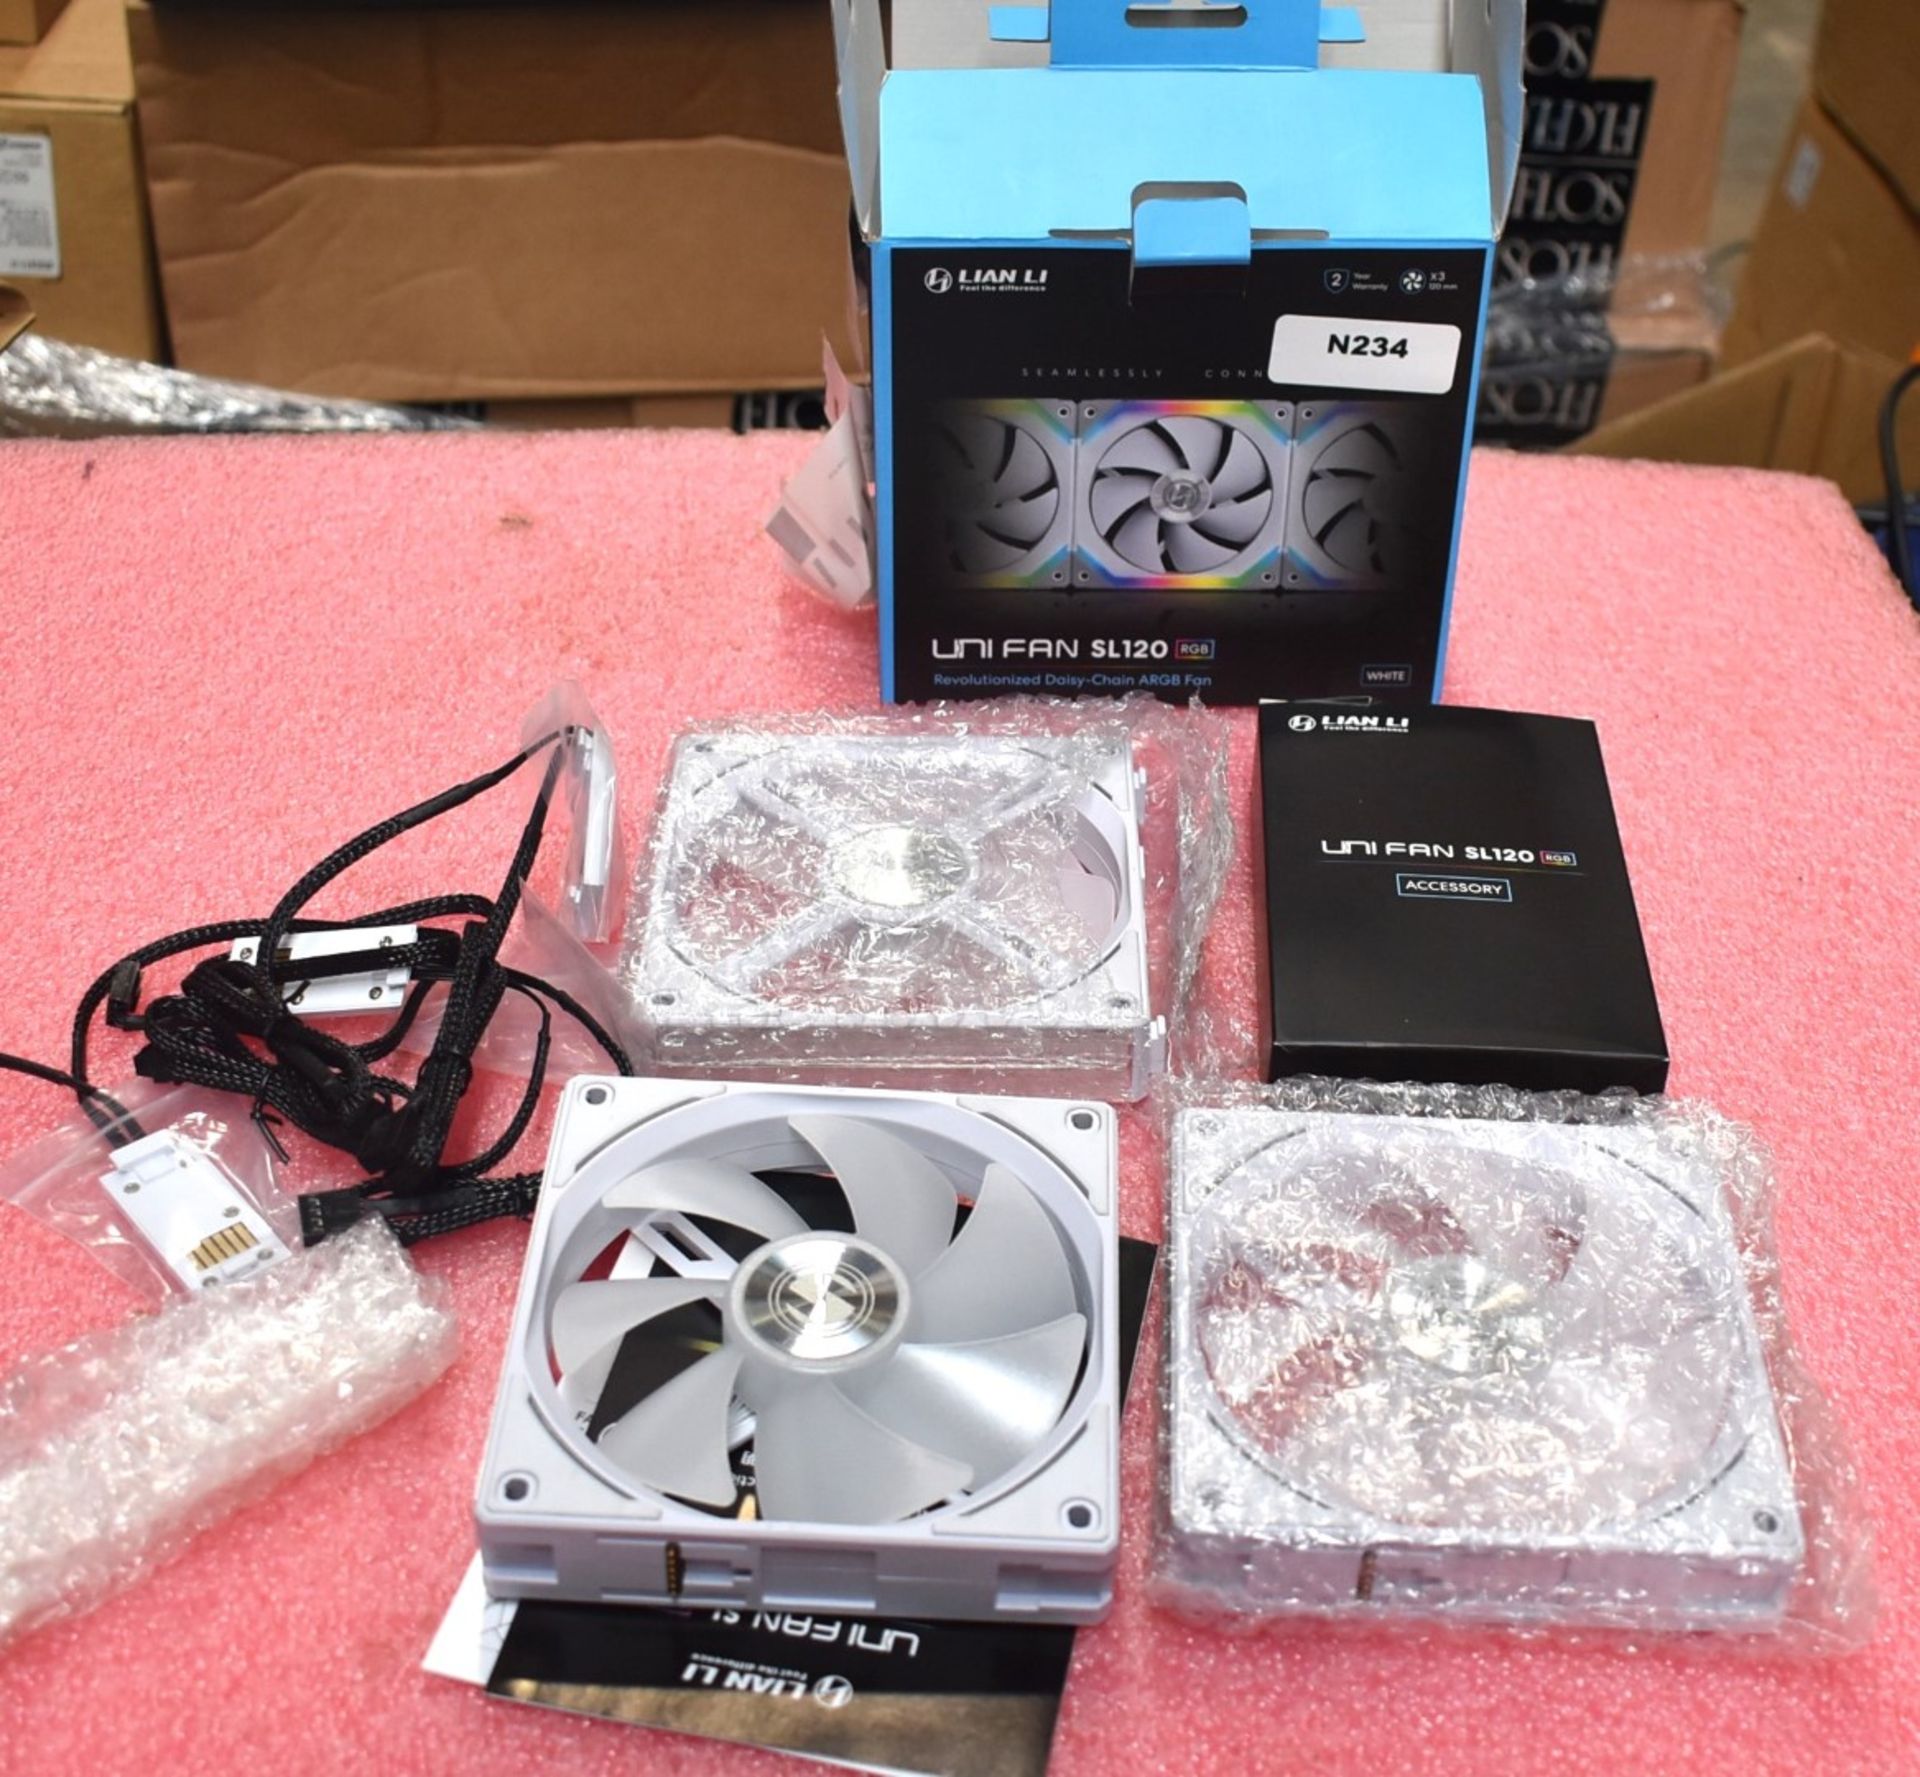 3 x Lian Li Uni Fan SL120 RGB 120mm Fans For PC Cases - Unused Boxed Stock - Image 2 of 6